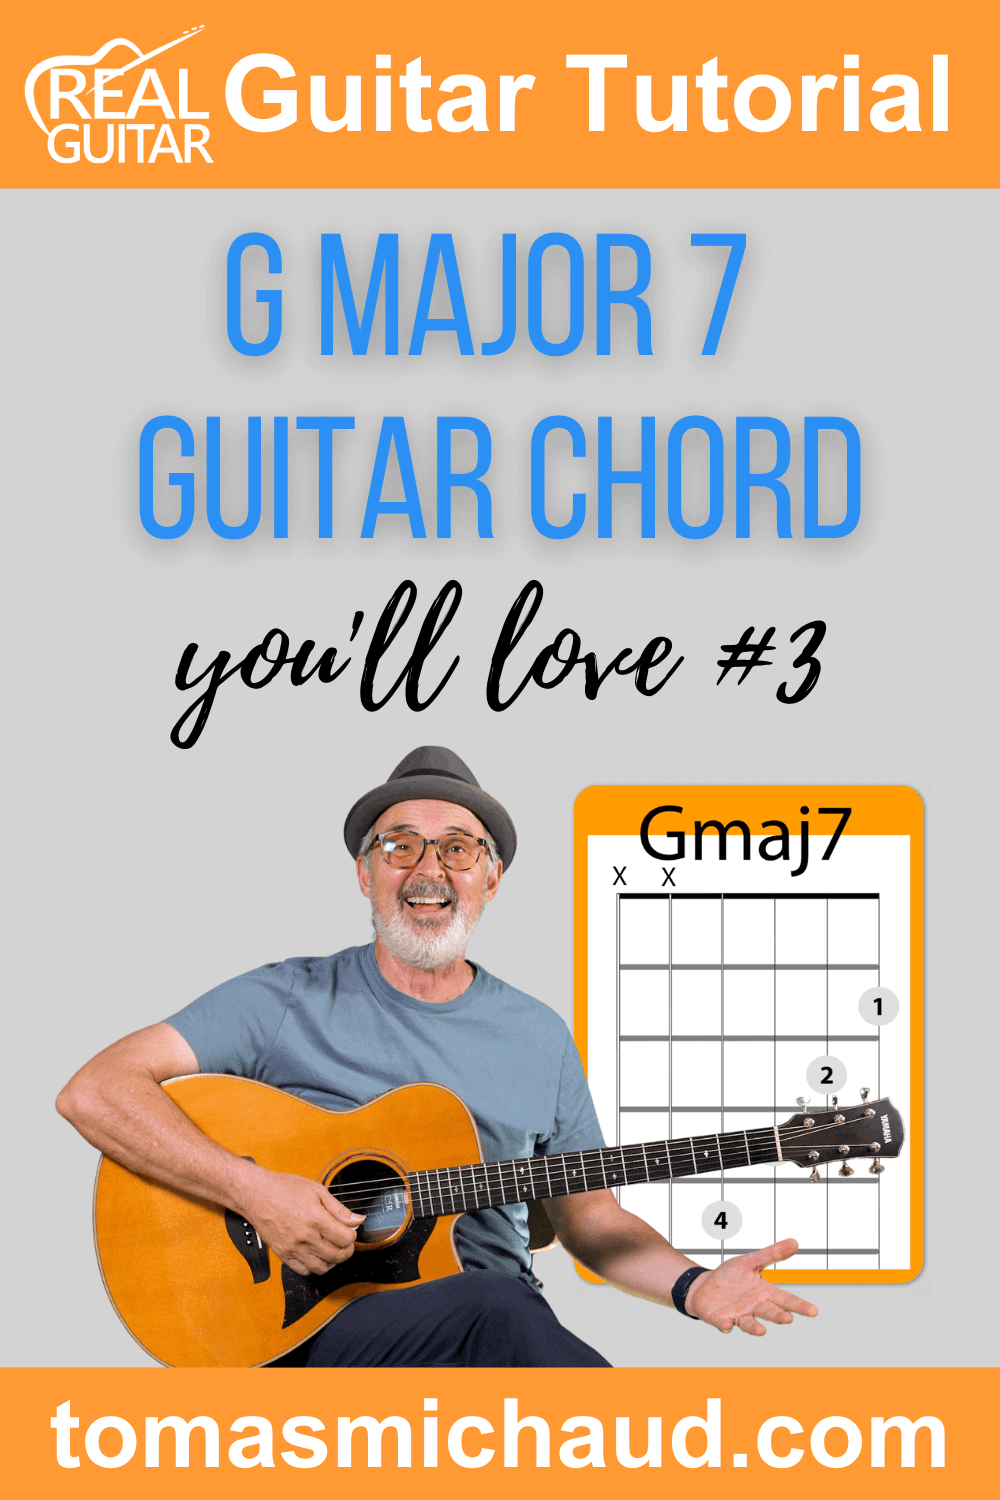 G Major 7 Guitar Chord (you'll love #3)